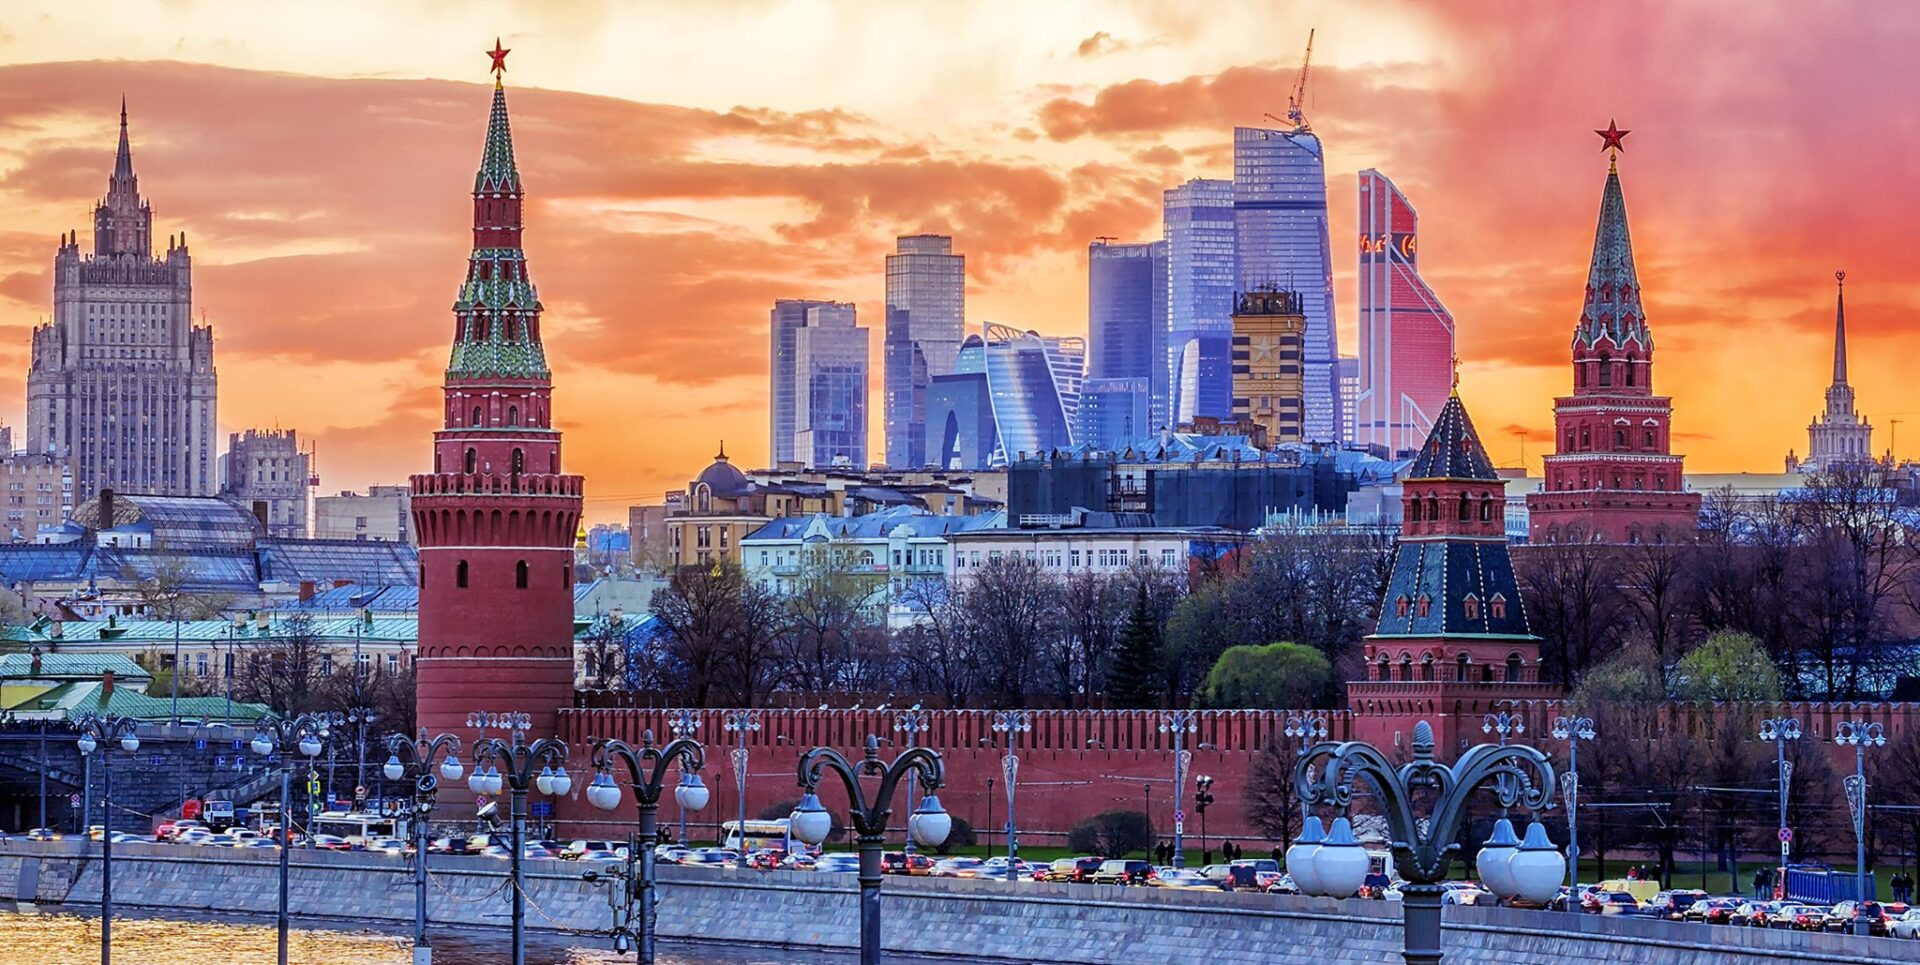 Moscova